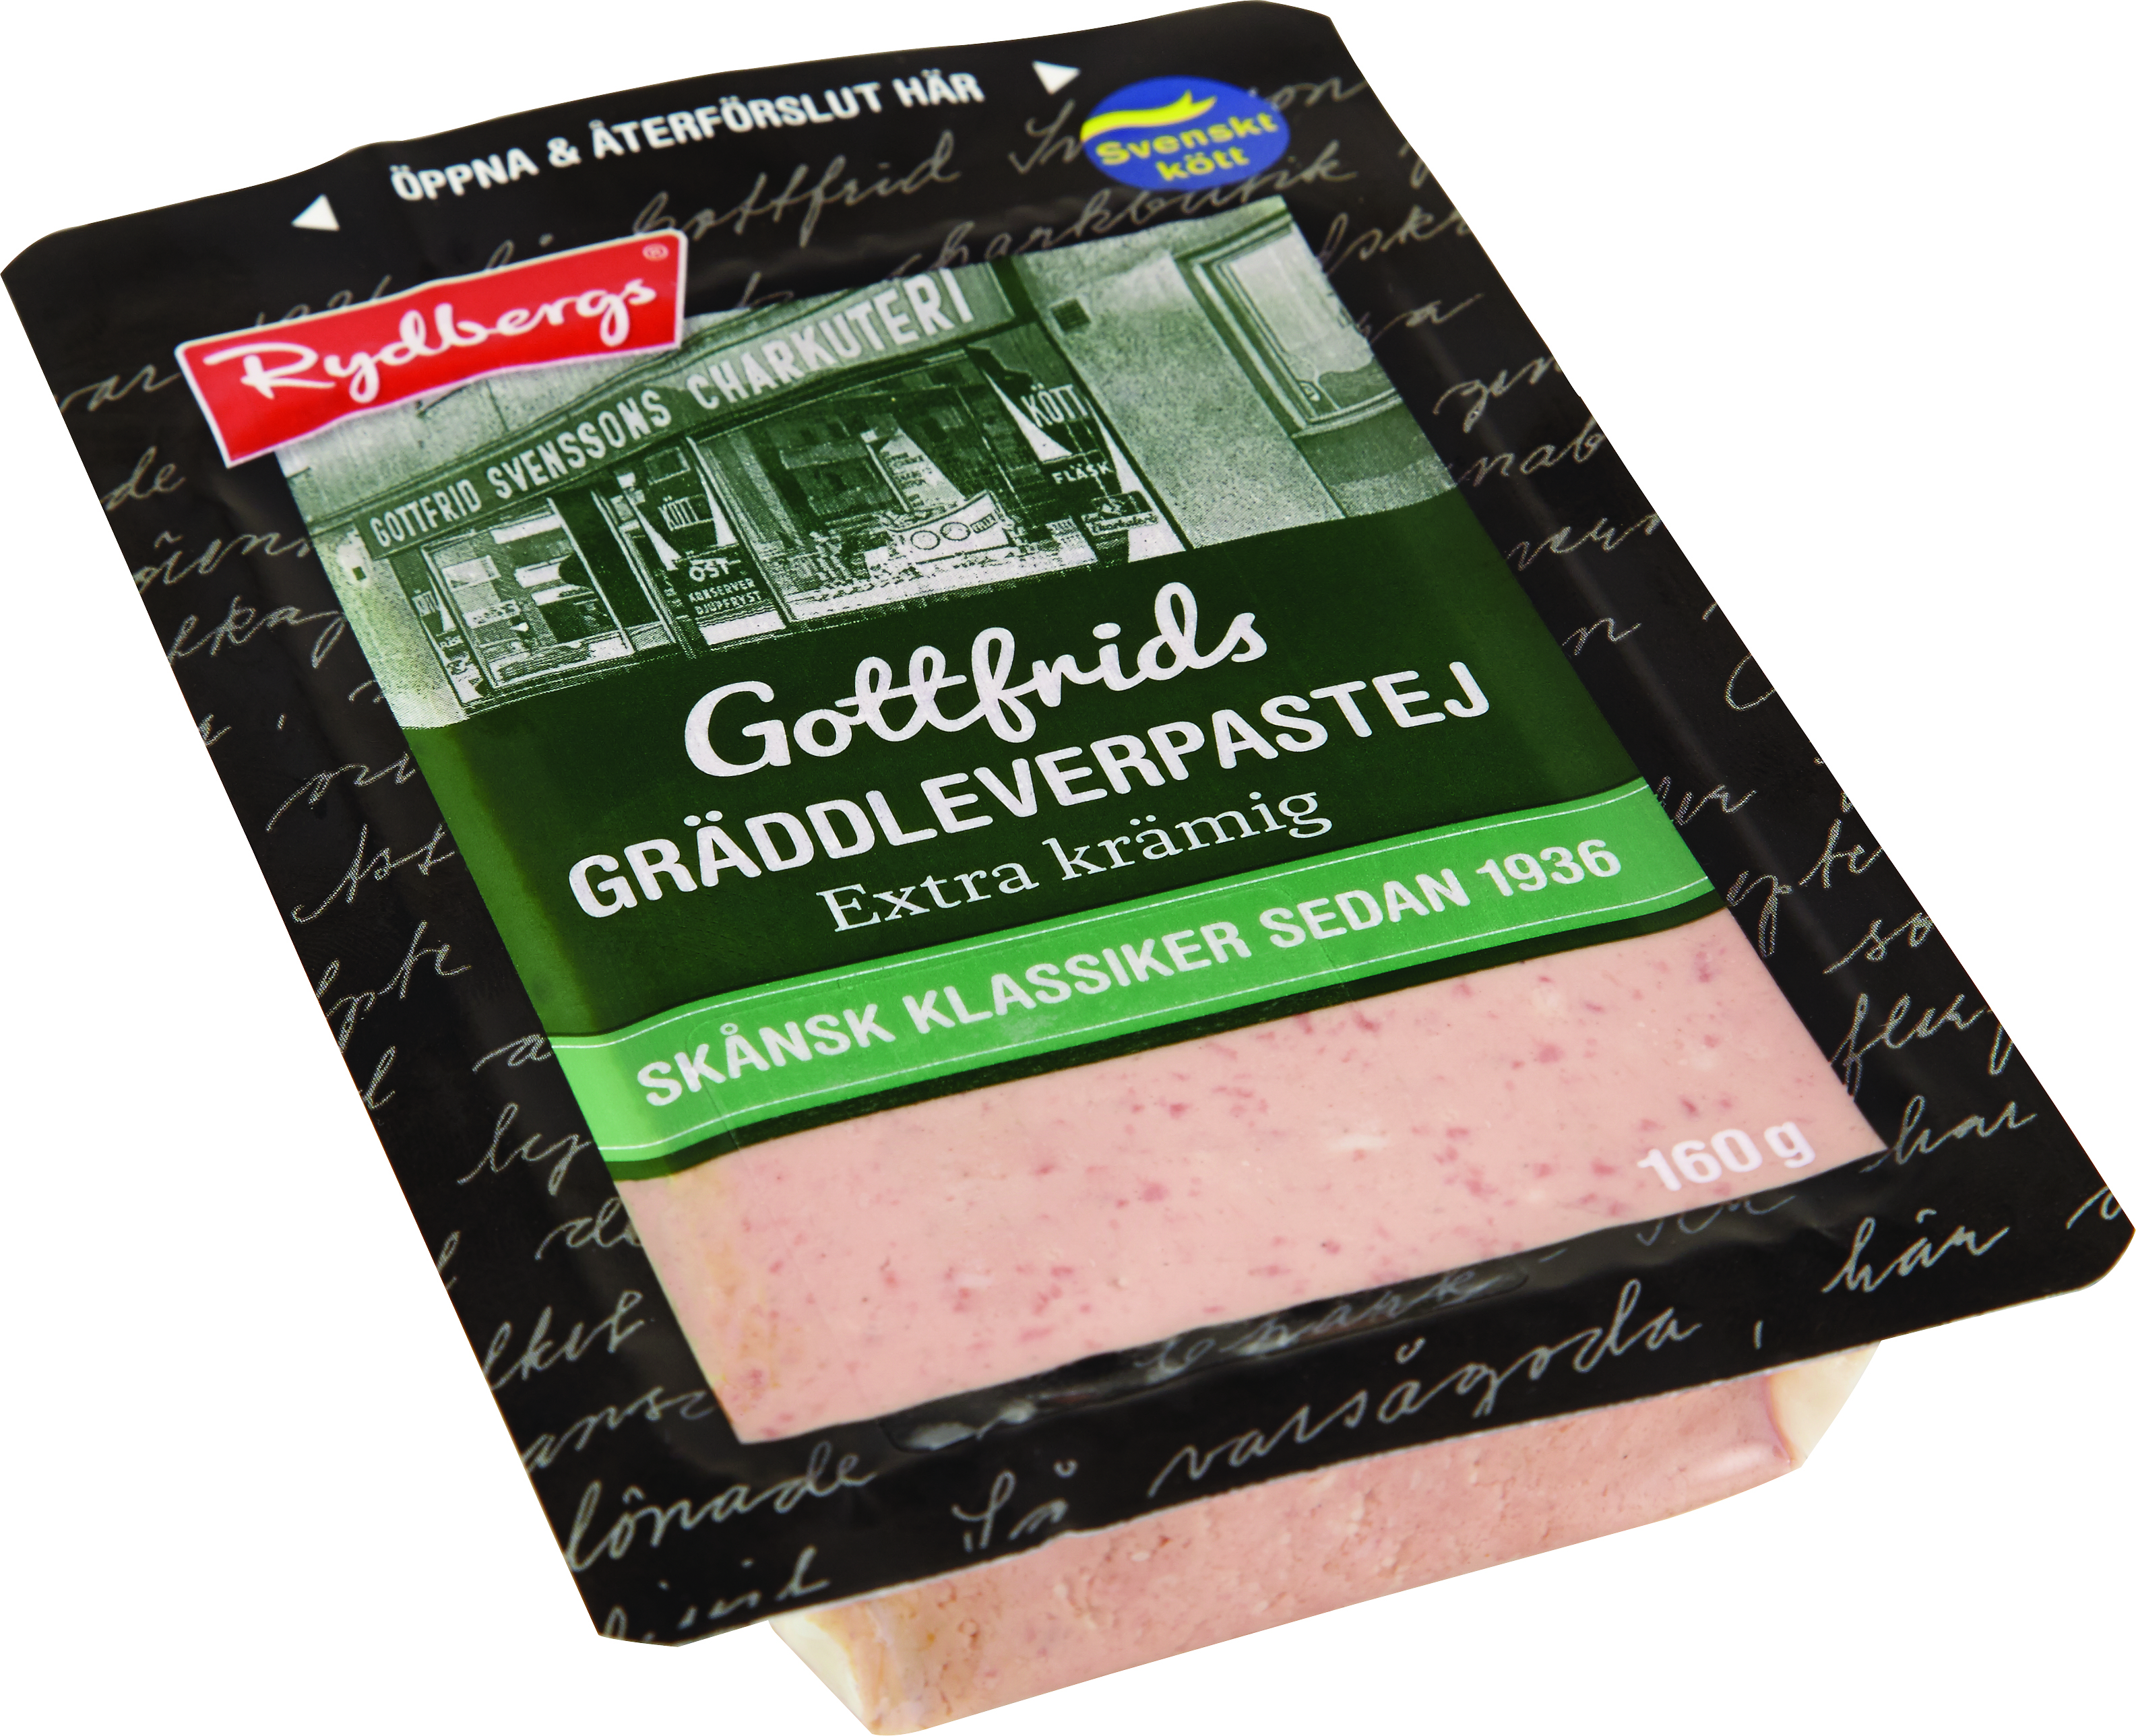 <p>Gottfrids Gräddleverpastej<br />
Foodmark</p>
